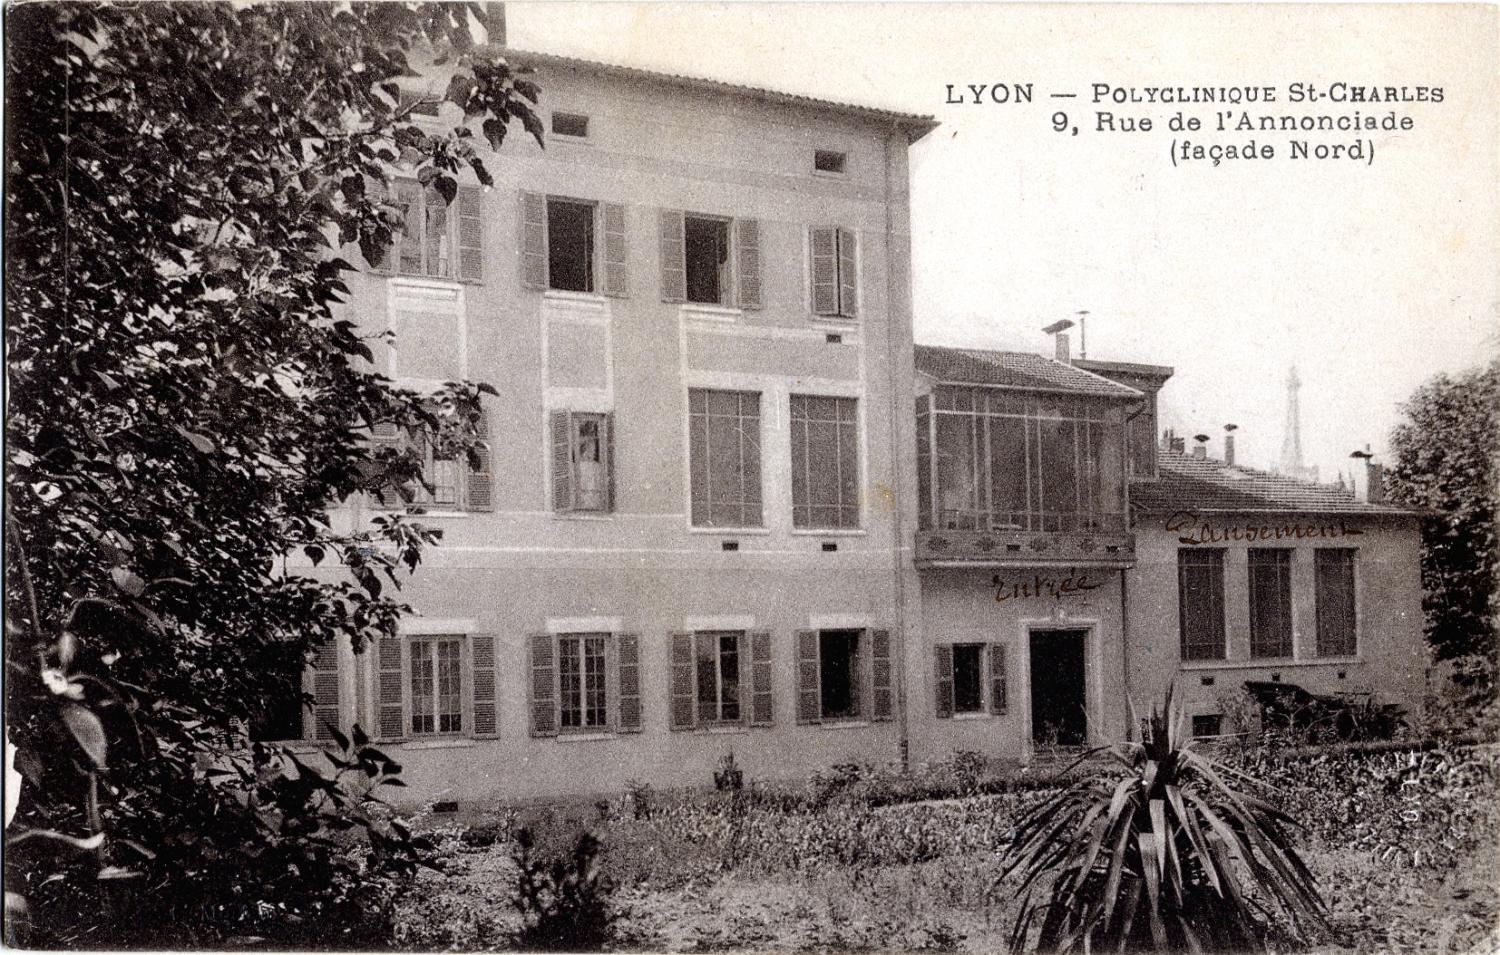 LYON : Polyclinique St-Charles, 9, Rue de l'Annonciade (façade Nord)